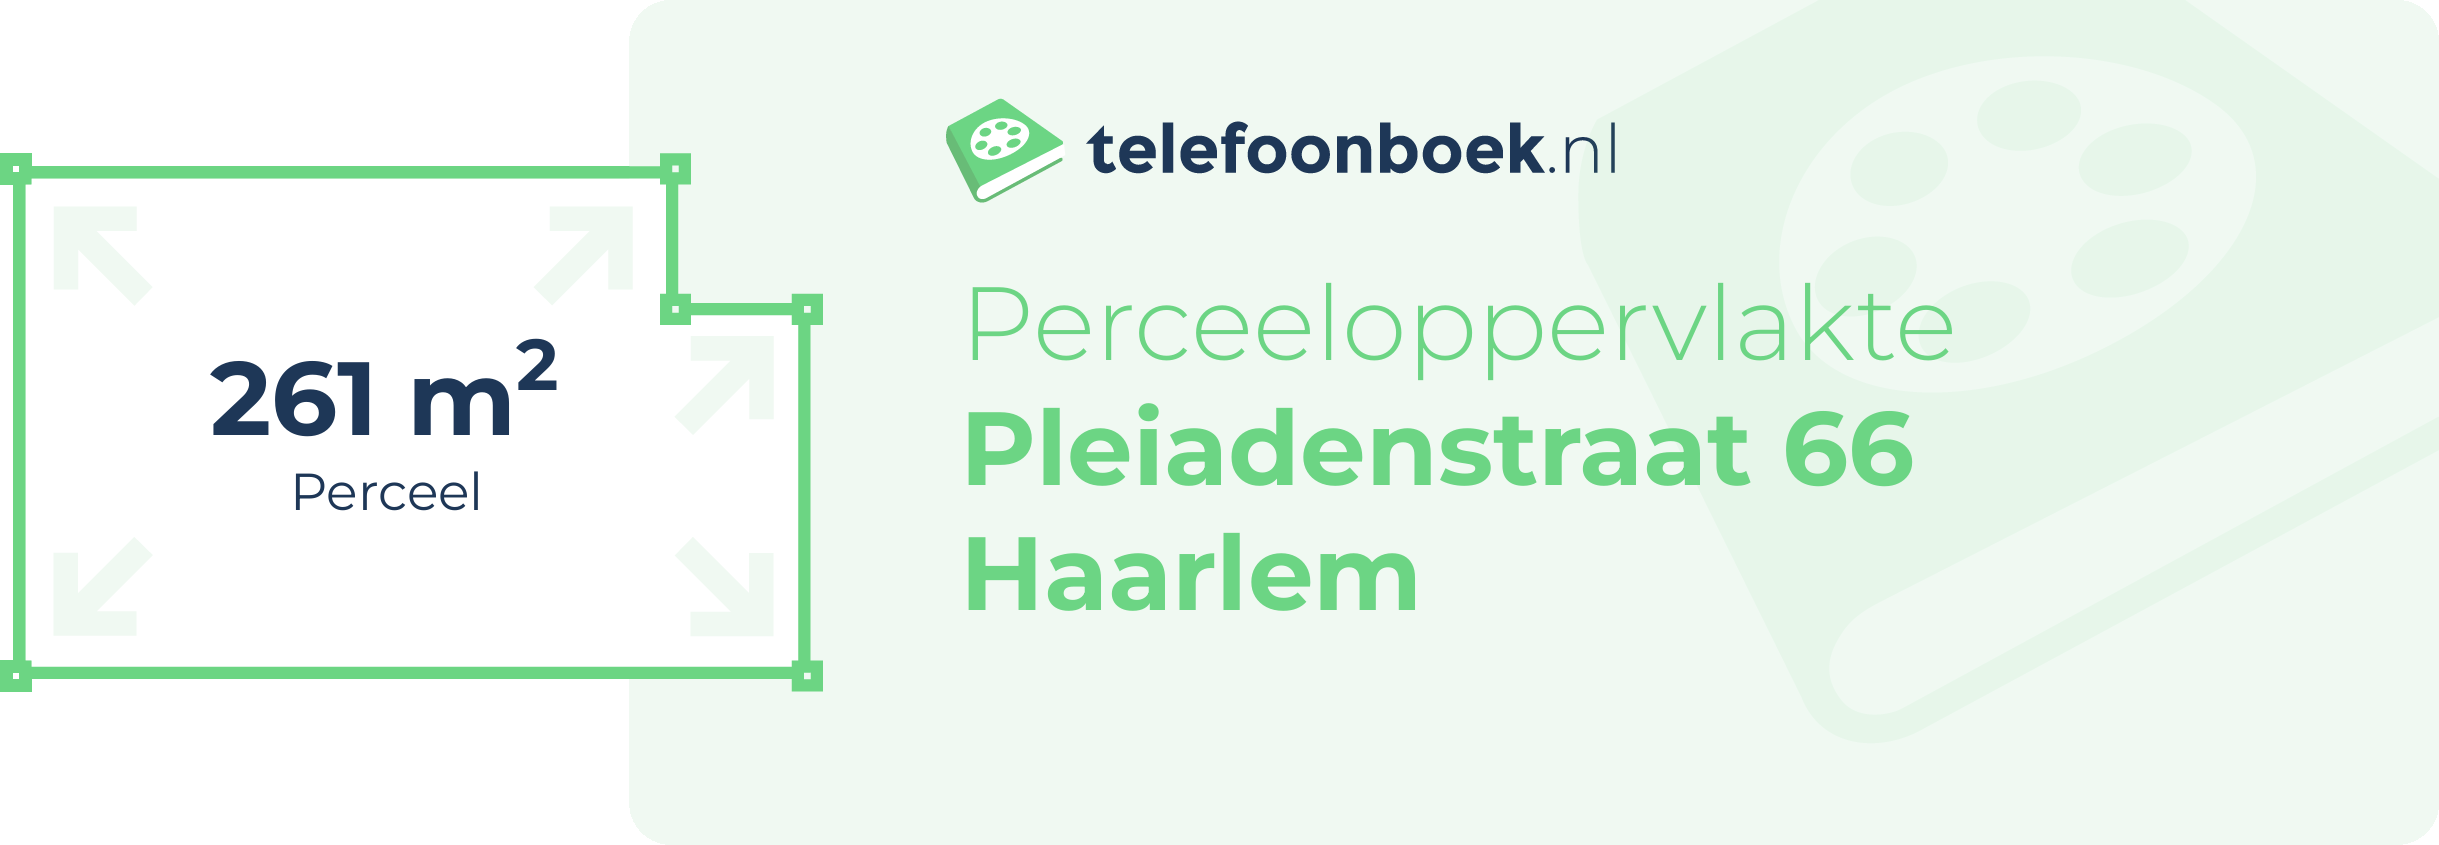 Perceeloppervlakte Pleiadenstraat 66 Haarlem